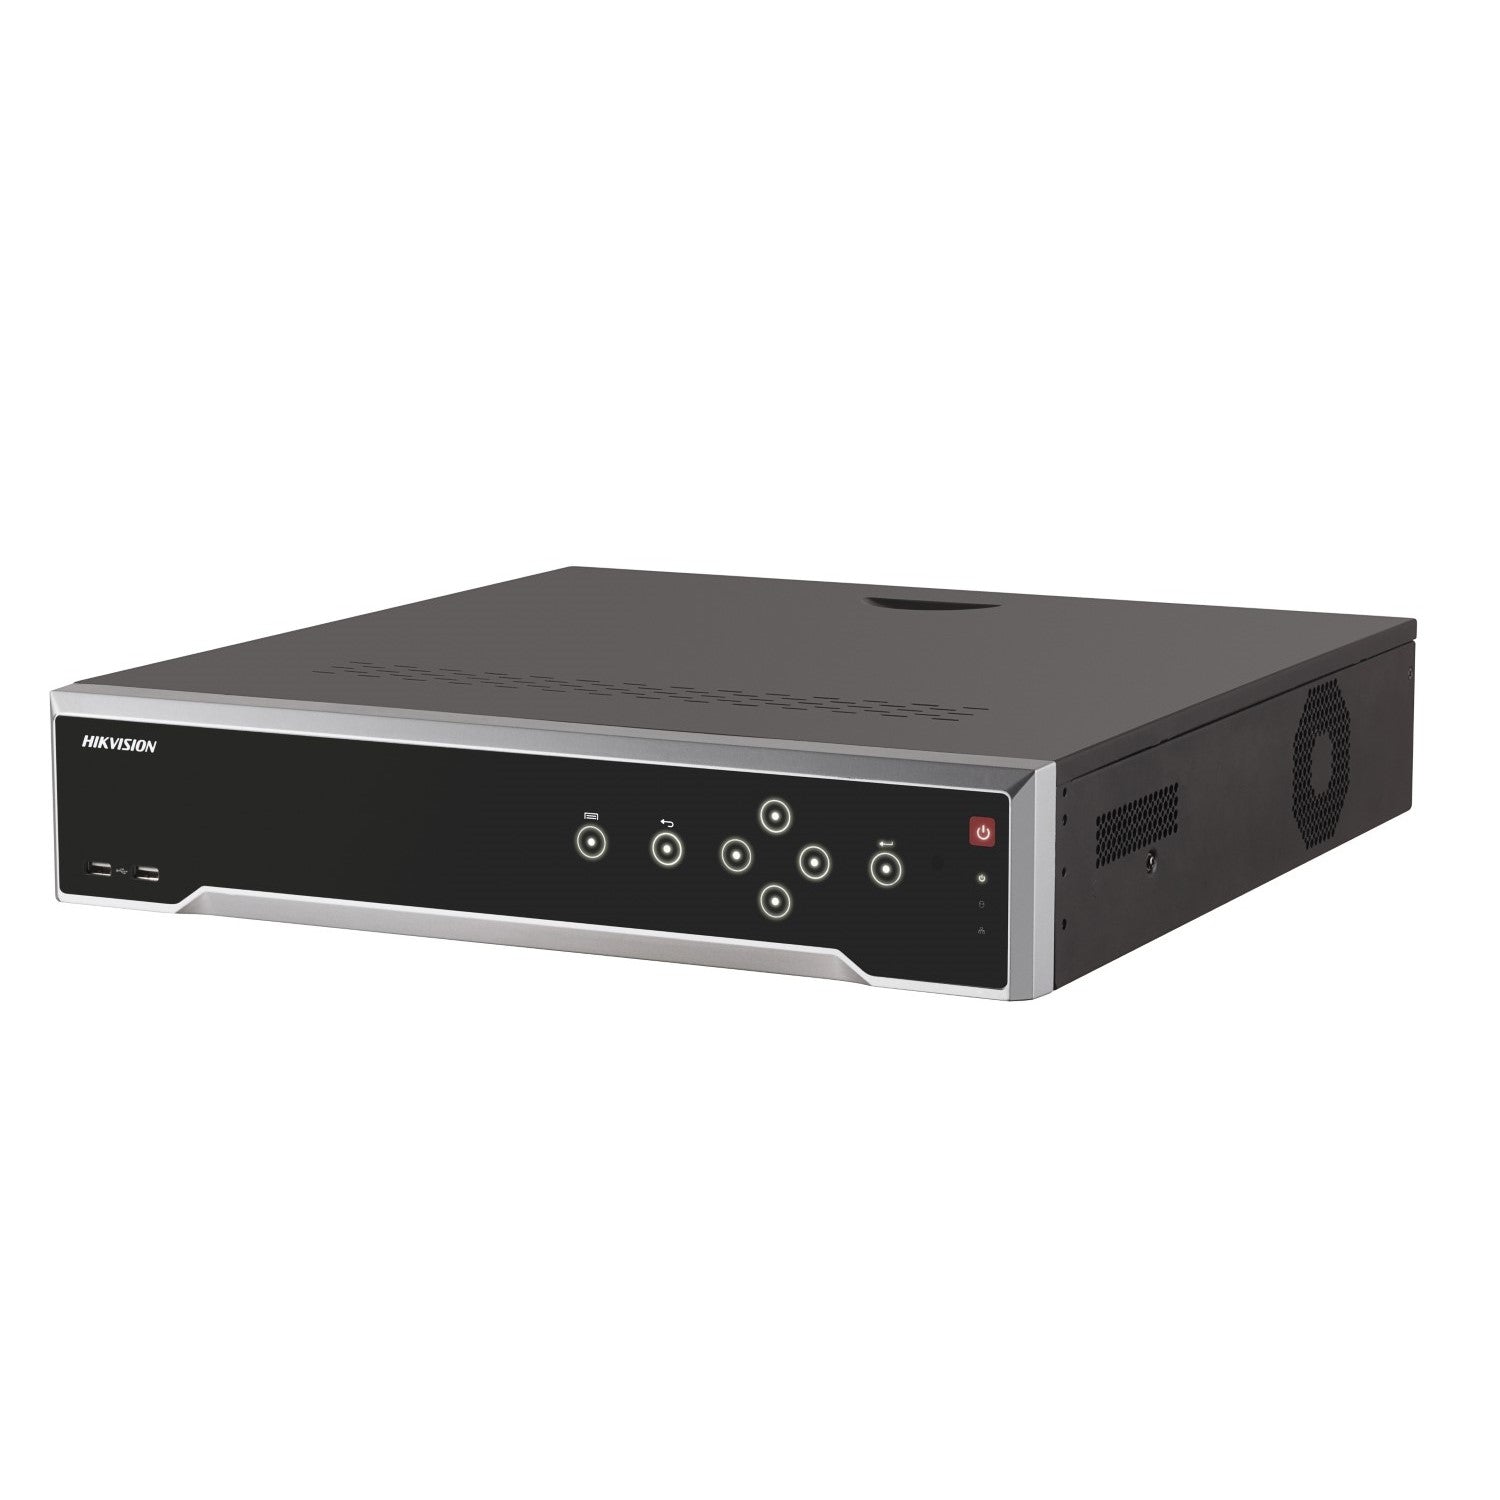 Hikvision DS-7732NI-I4/16P Series 32ch NVR, 16 PoE Ports, 256Mbps, H.265, 4K, 1.5RU, 4 x HDD Bays + 3TB